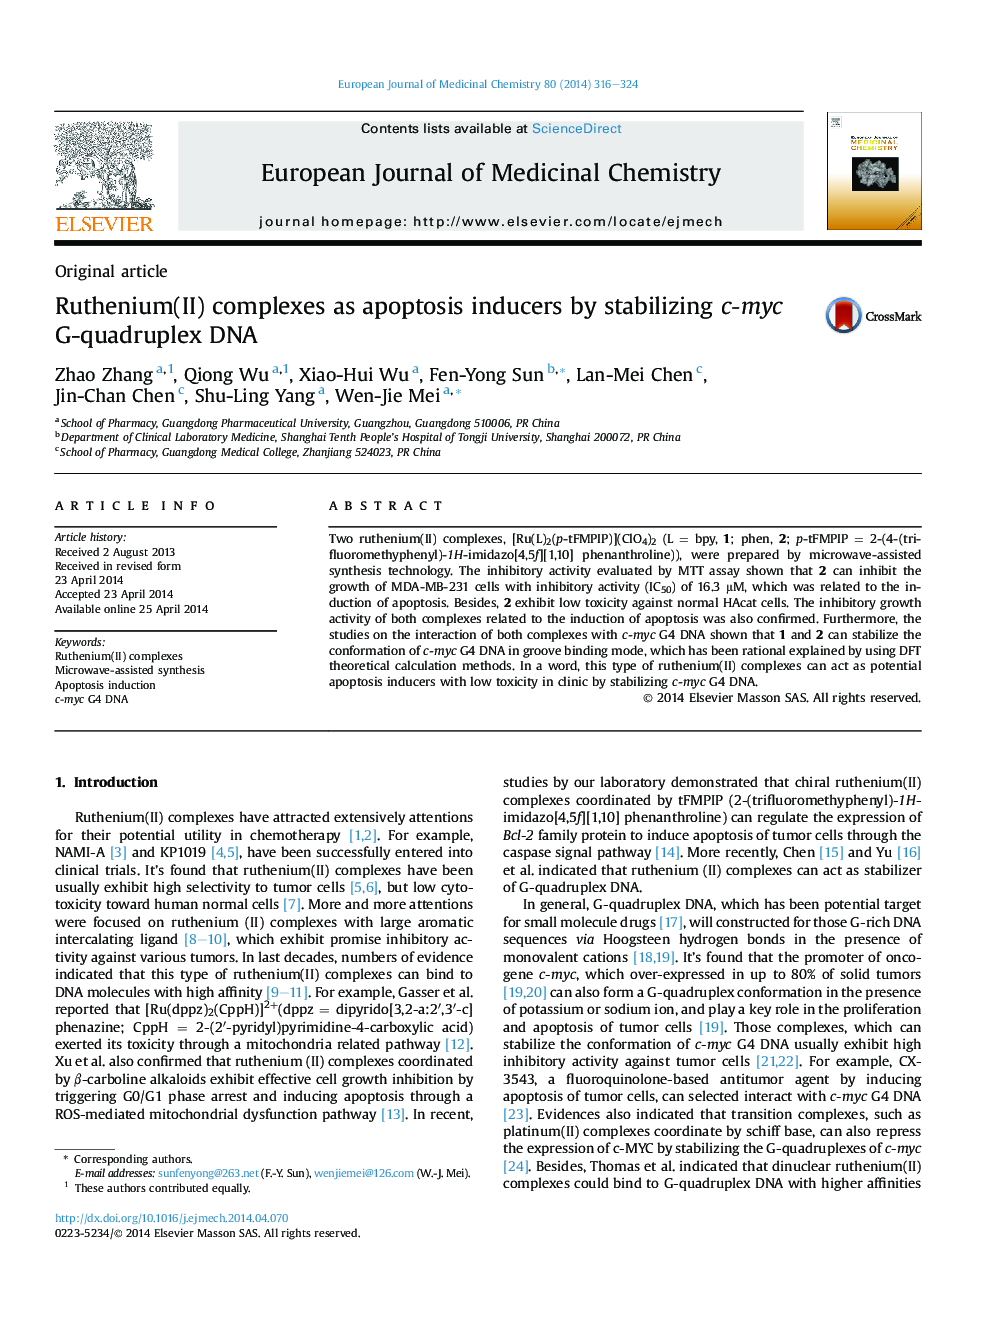 Ruthenium(II) complexes as apoptosis inducers by stabilizing c-myc G-quadruplex DNA